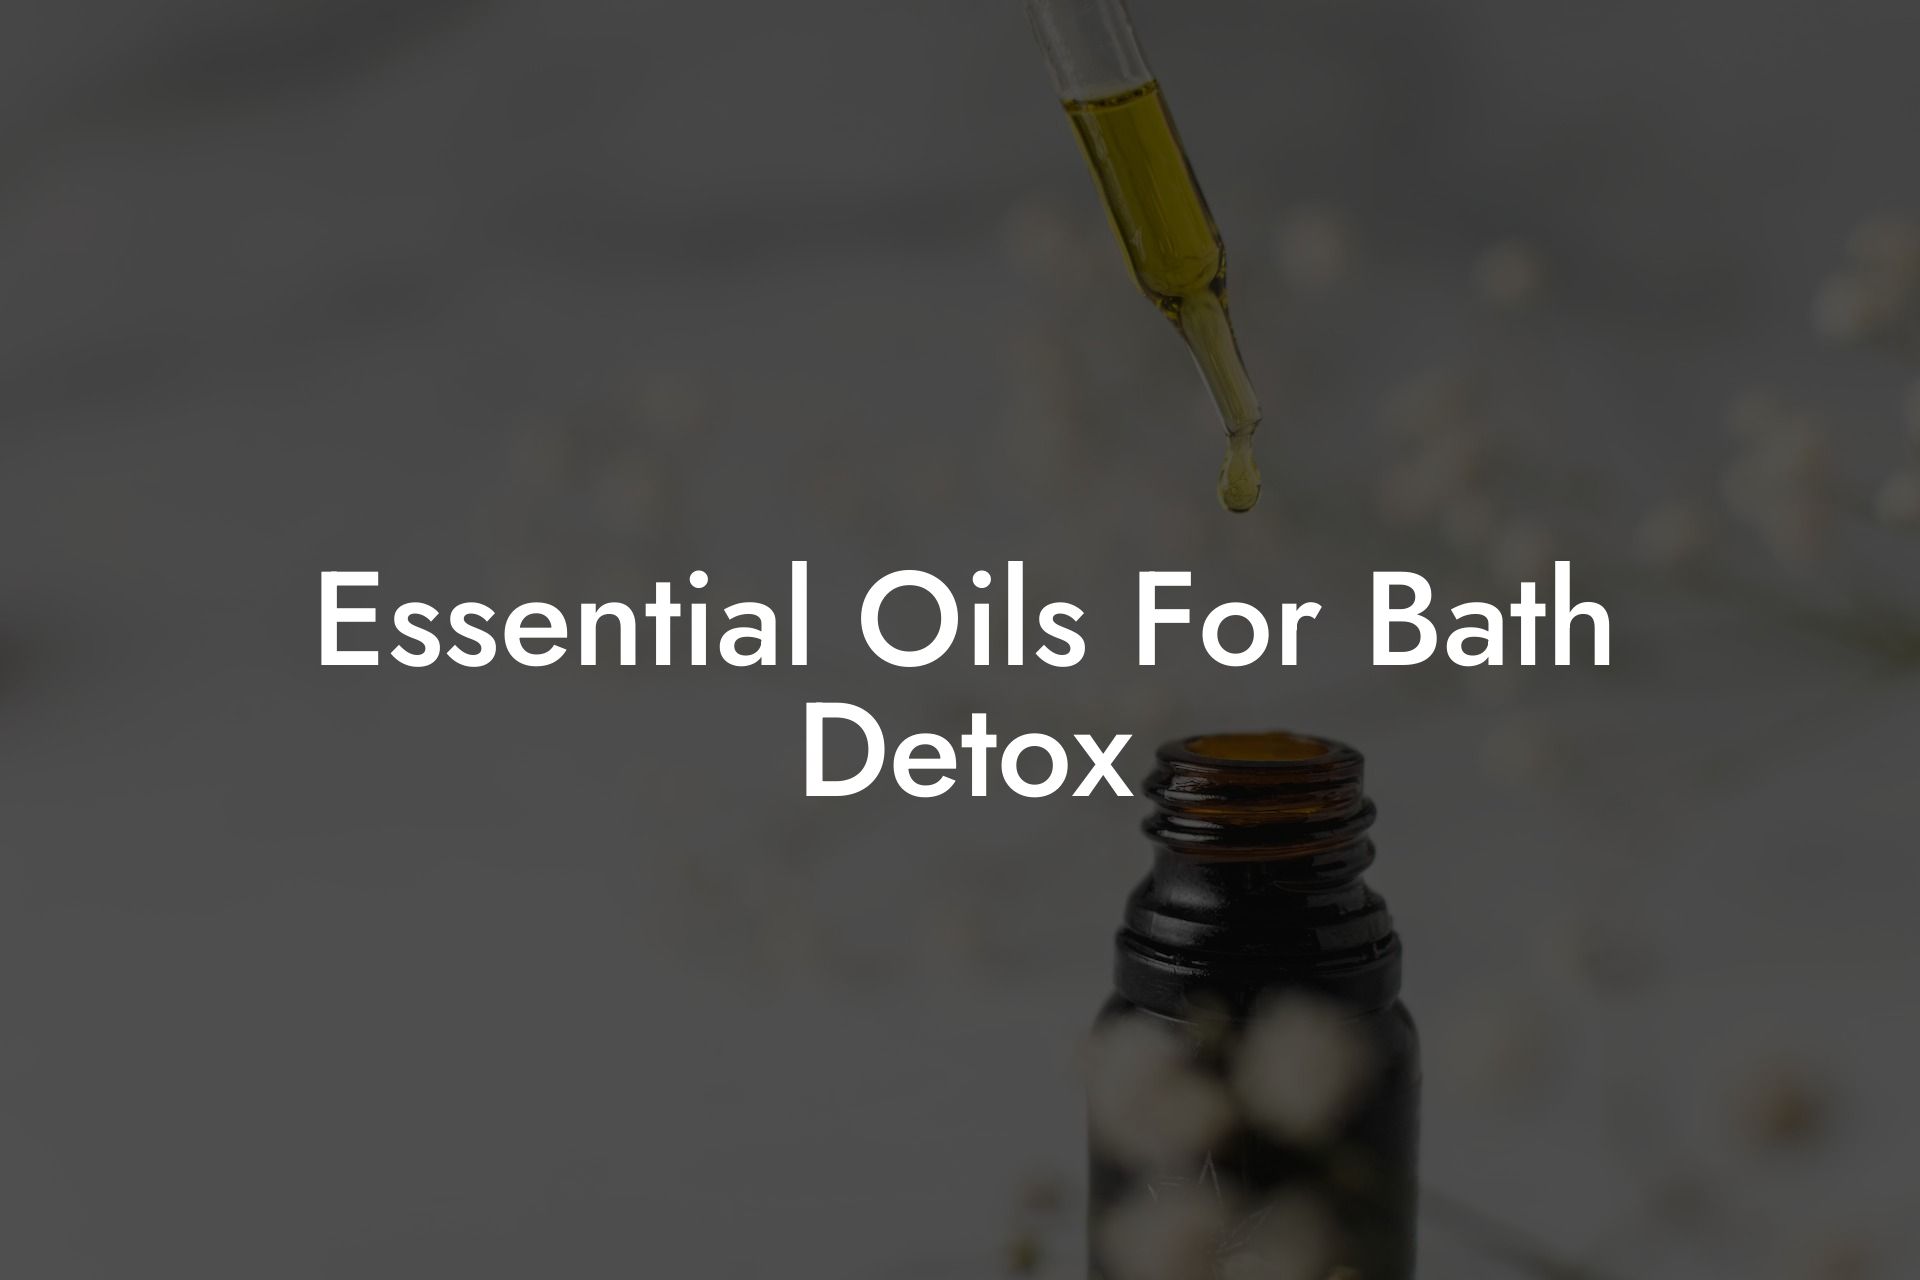 Essential Oils For Bath Detox